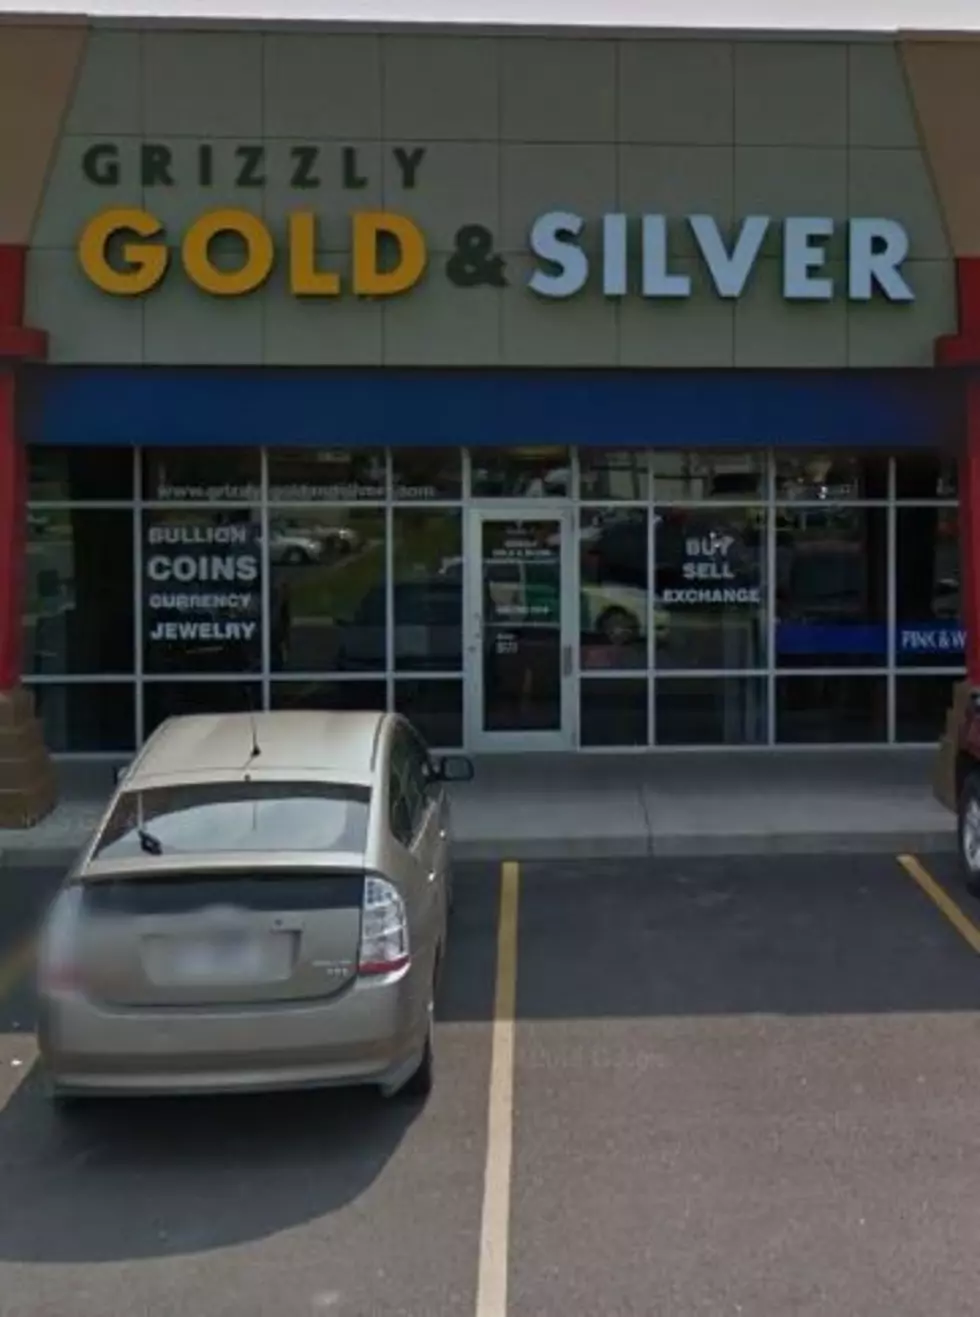 Billings Coin Shop Burglarized